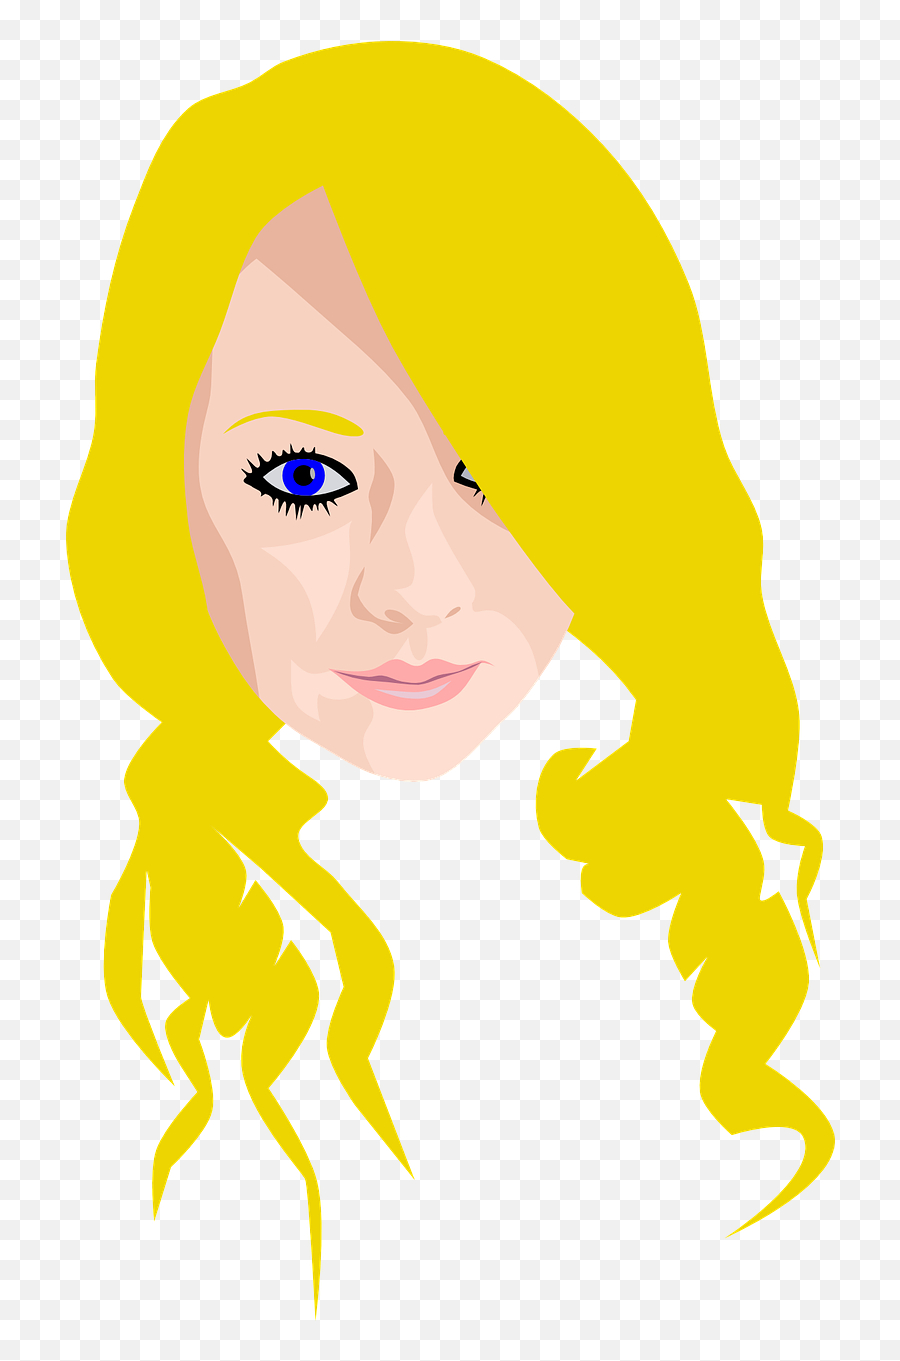 Woman Girl Hair - Free Vector Graphic On Pixabay Cartoon Woman Blonde Hair Blue Eye Emoji,Emoji Of A Blond Female With One Eye Open